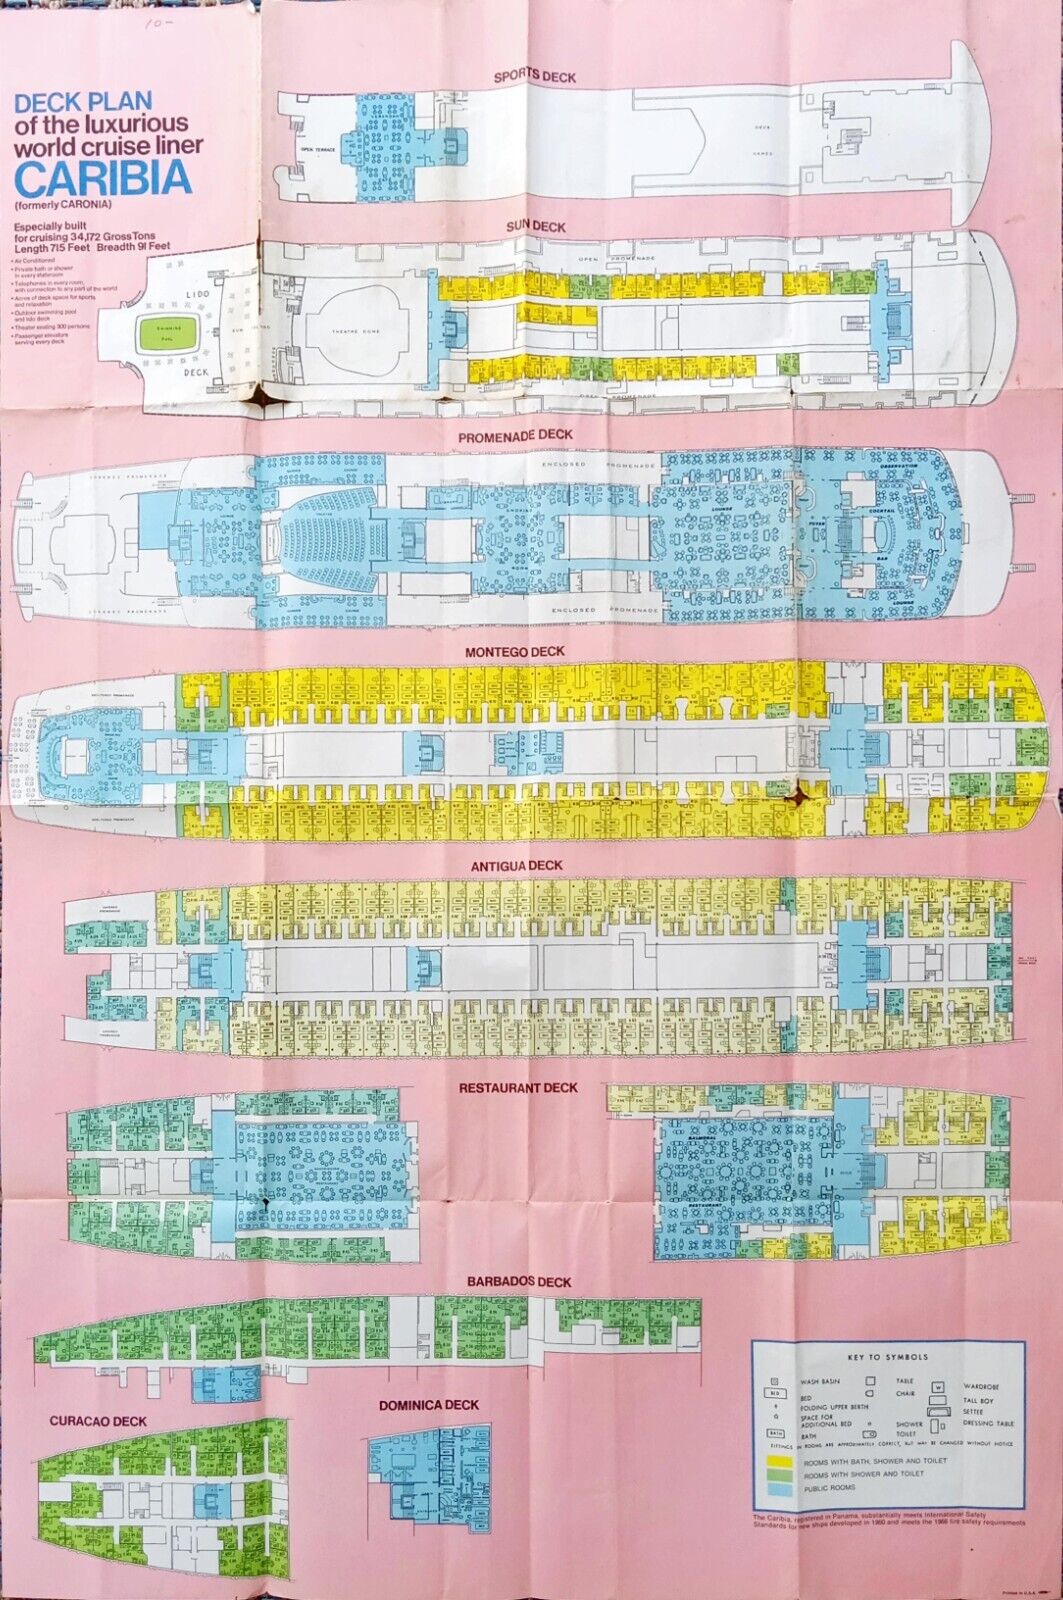 CARIBIA aka RMS CARONIA Star Cruise Line Deck Plan Brochure 1969